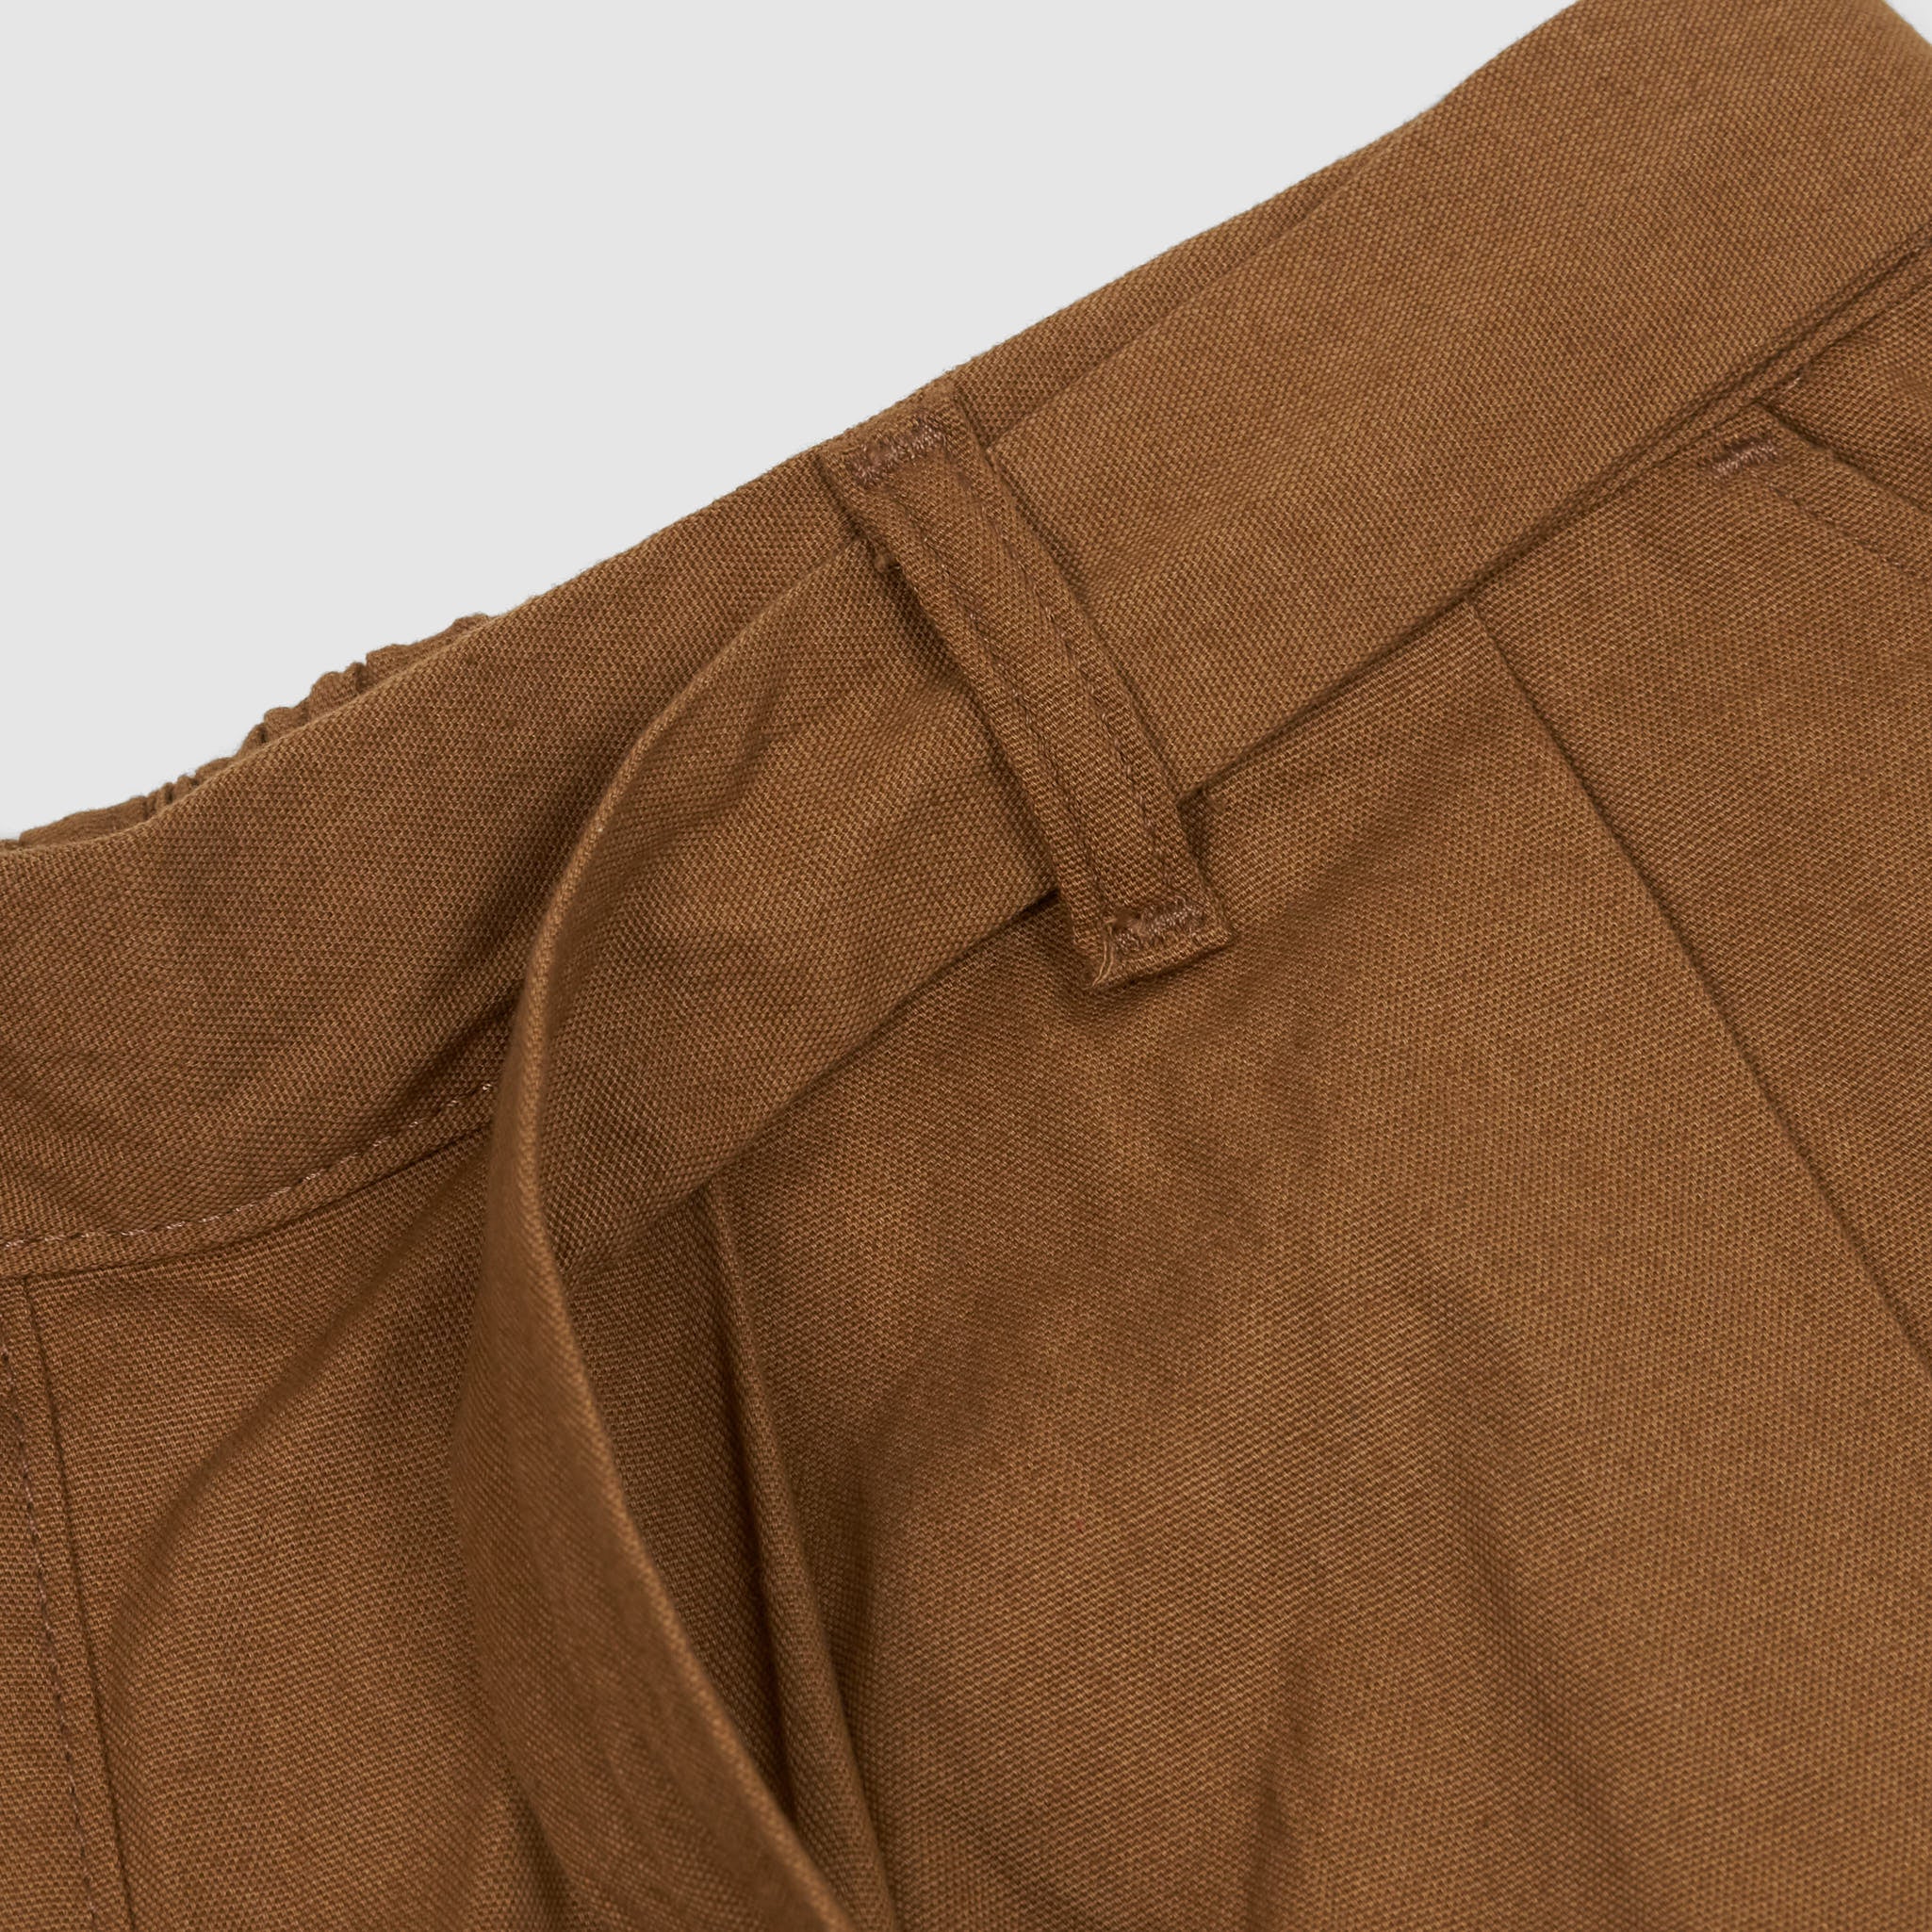 Carhartt mens Flame-resistant Canvas work utility pants, Dark Navy